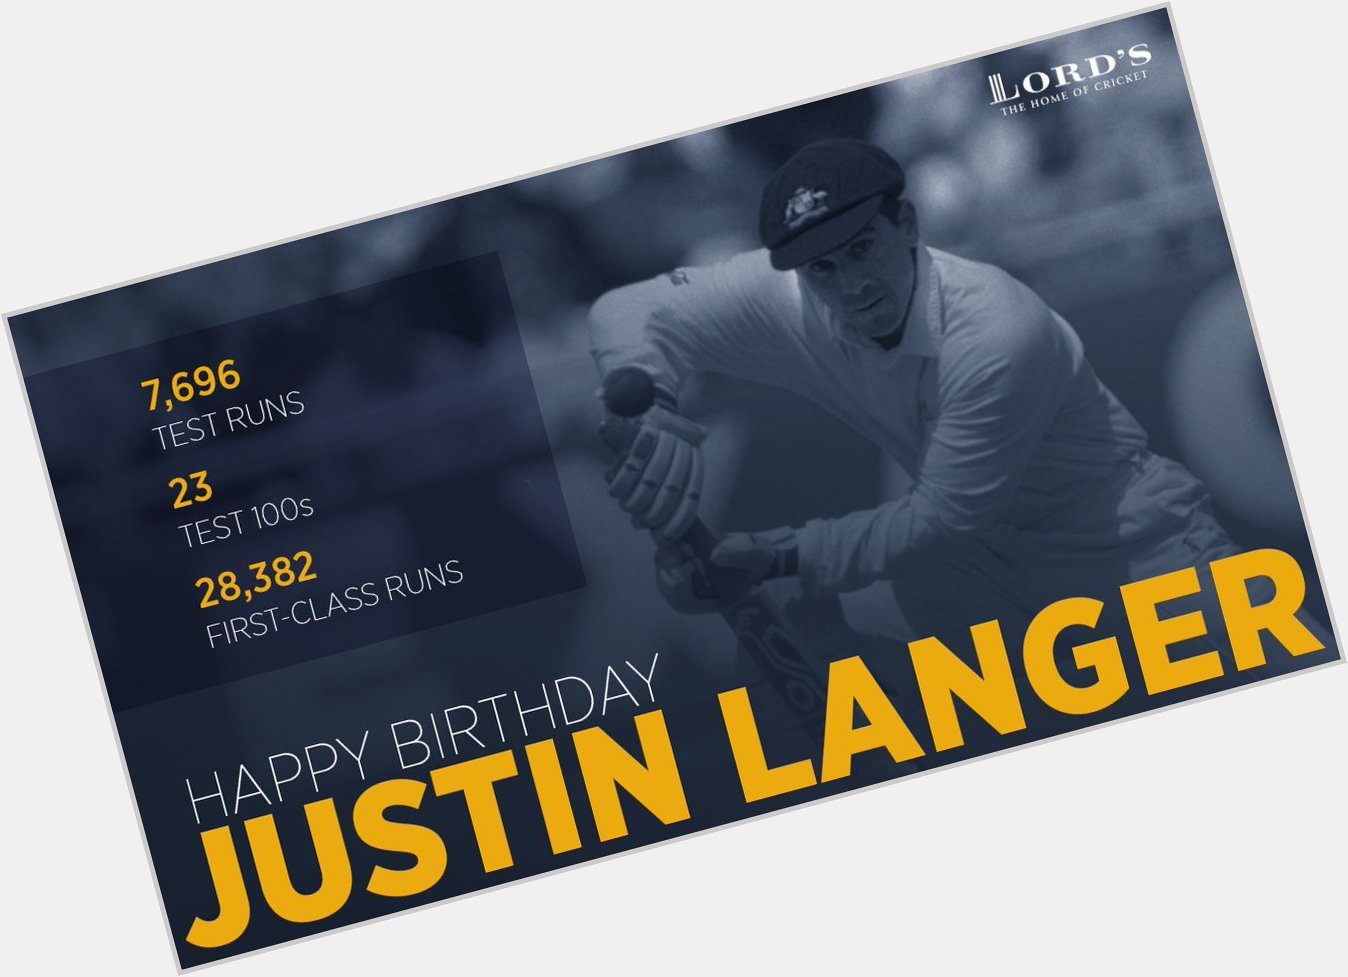  Happy Birthday to former batsman, Justin Langer! A fine opener, indeed! 